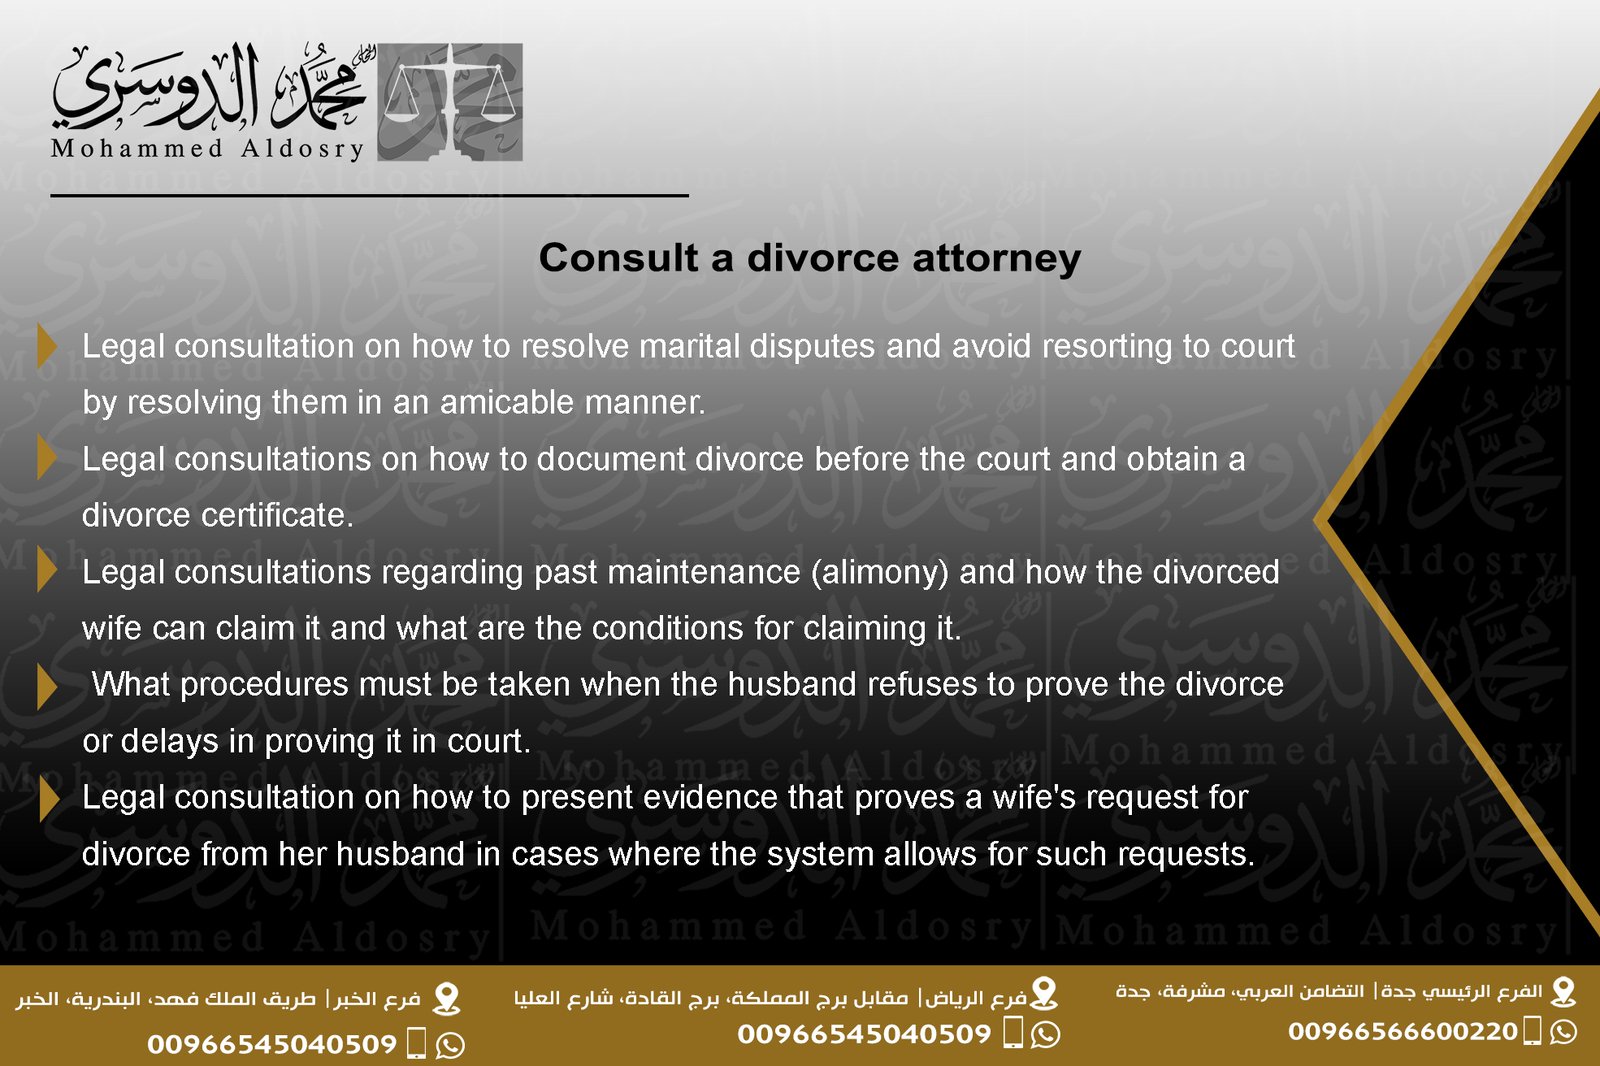 Consult a divorce attorney